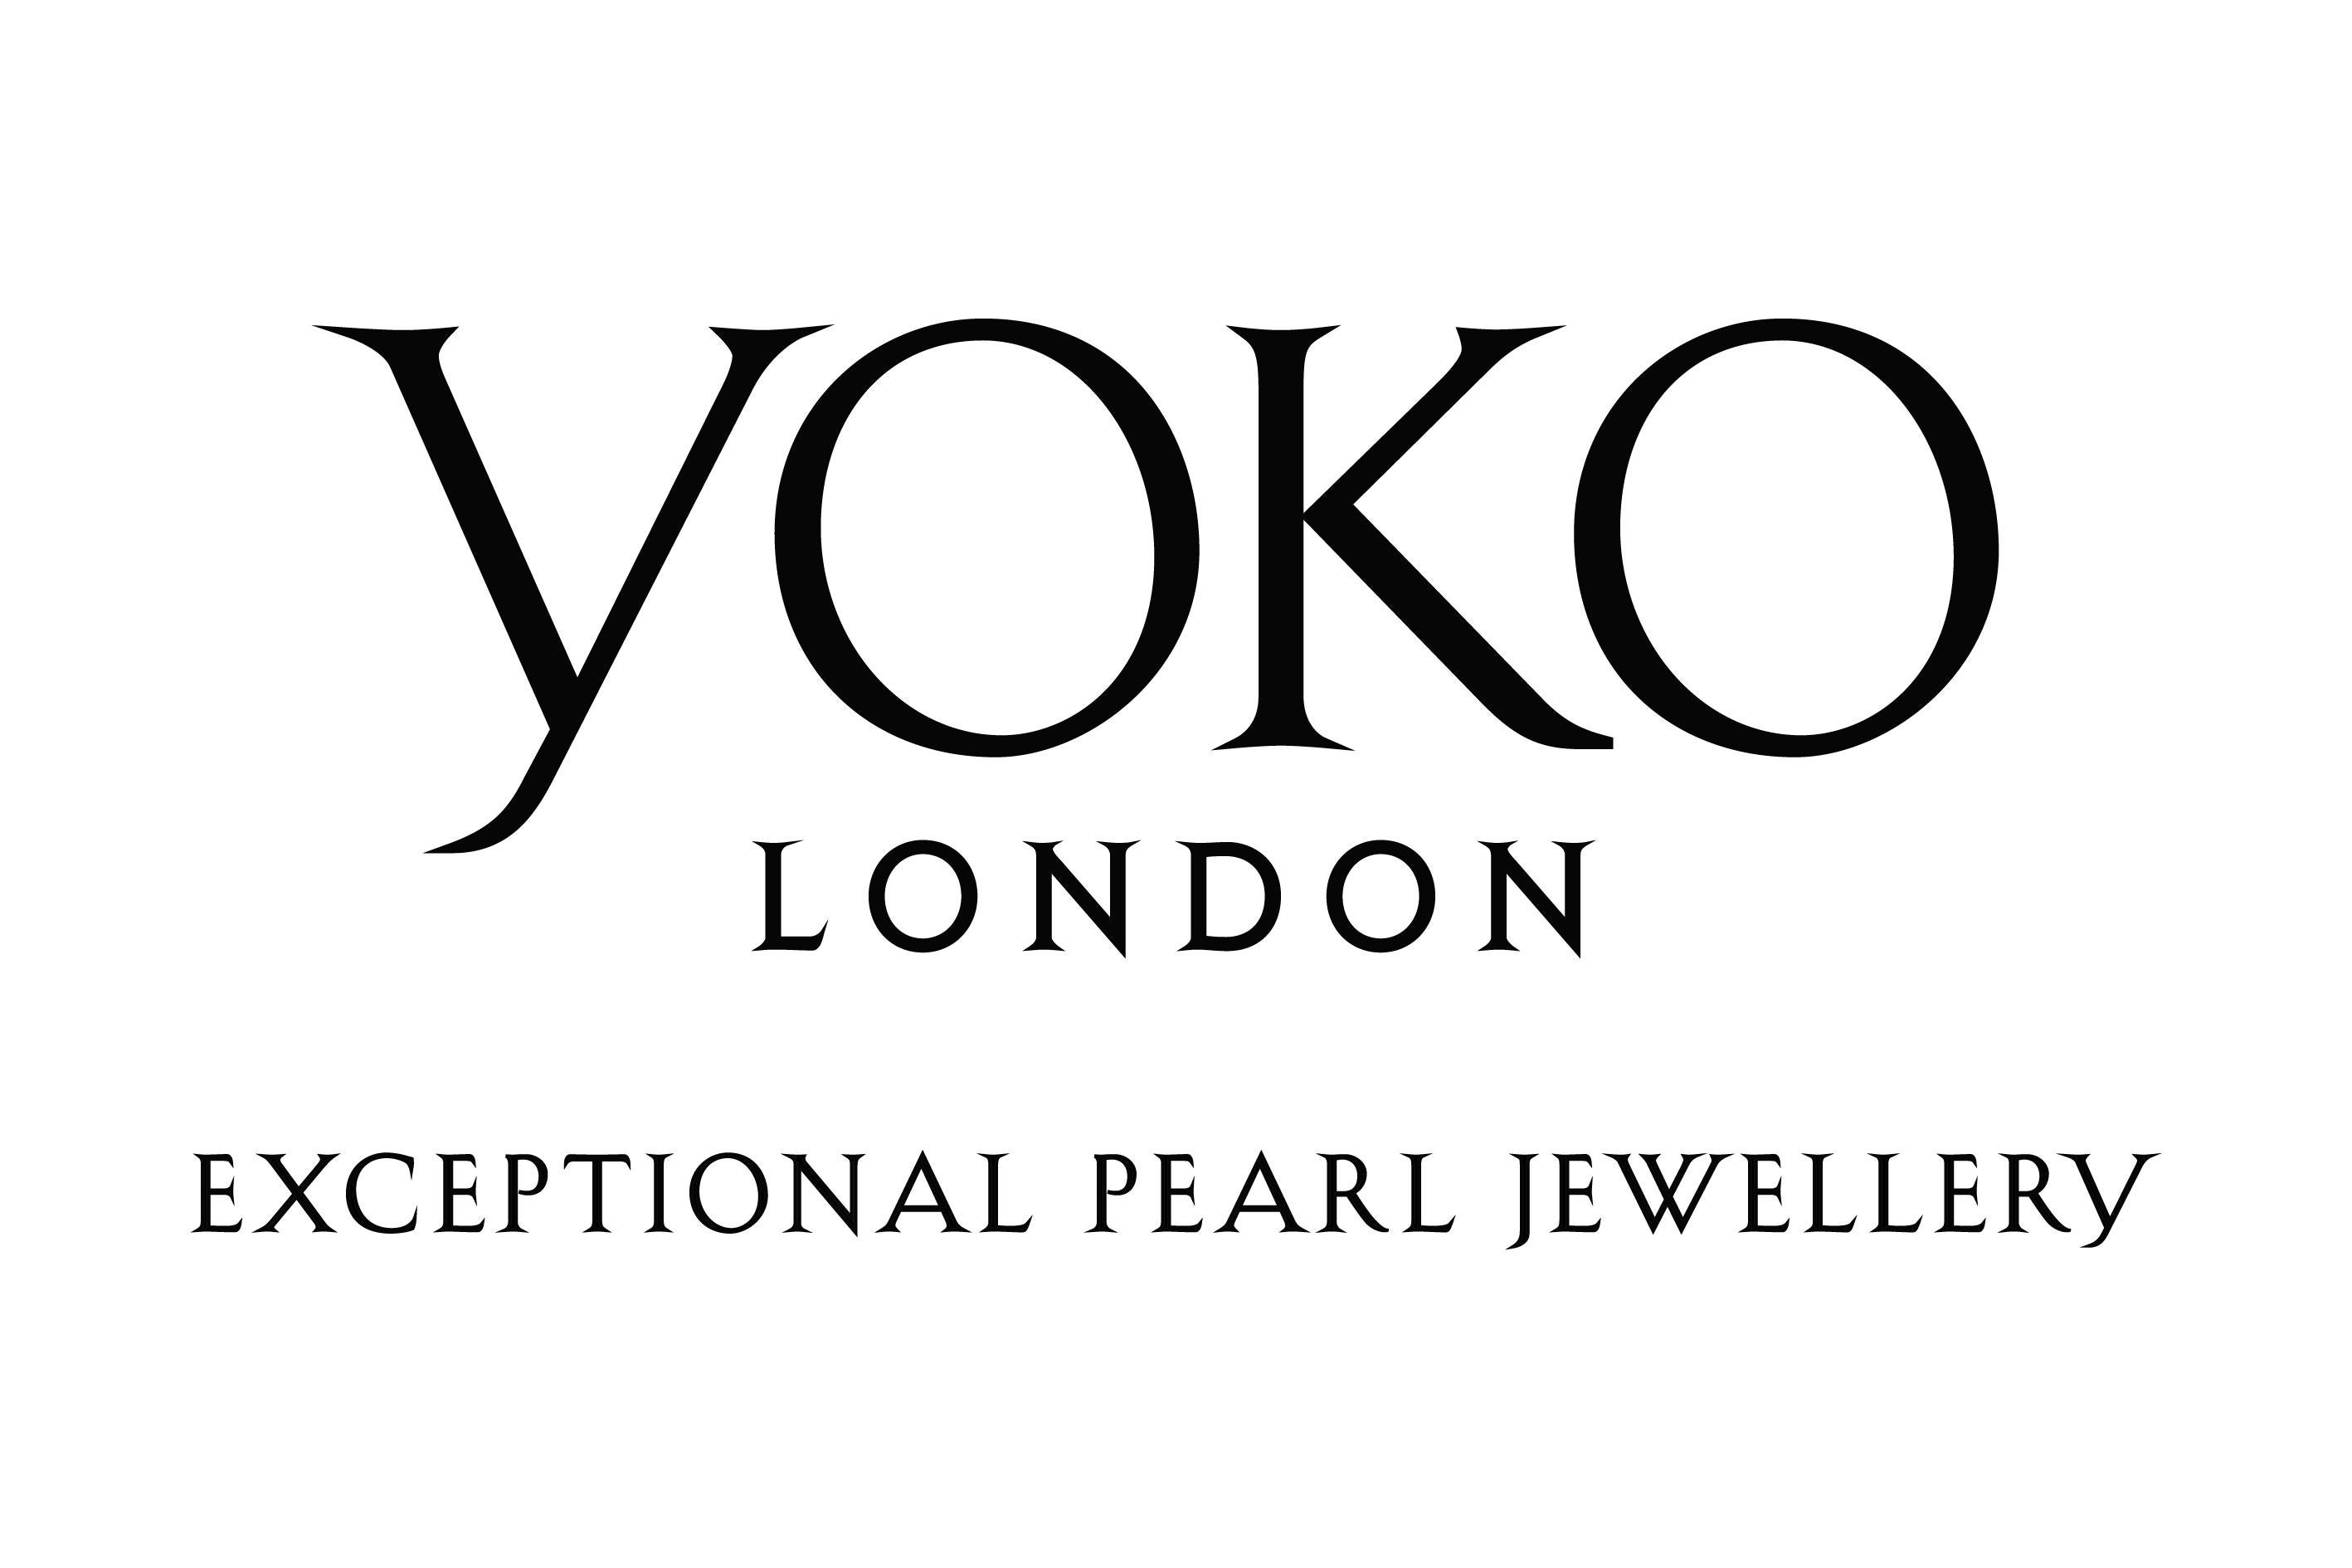 Yoko London South Sea Pearl and Diamond Earrings in 18 Karat White Gold For Sale 4